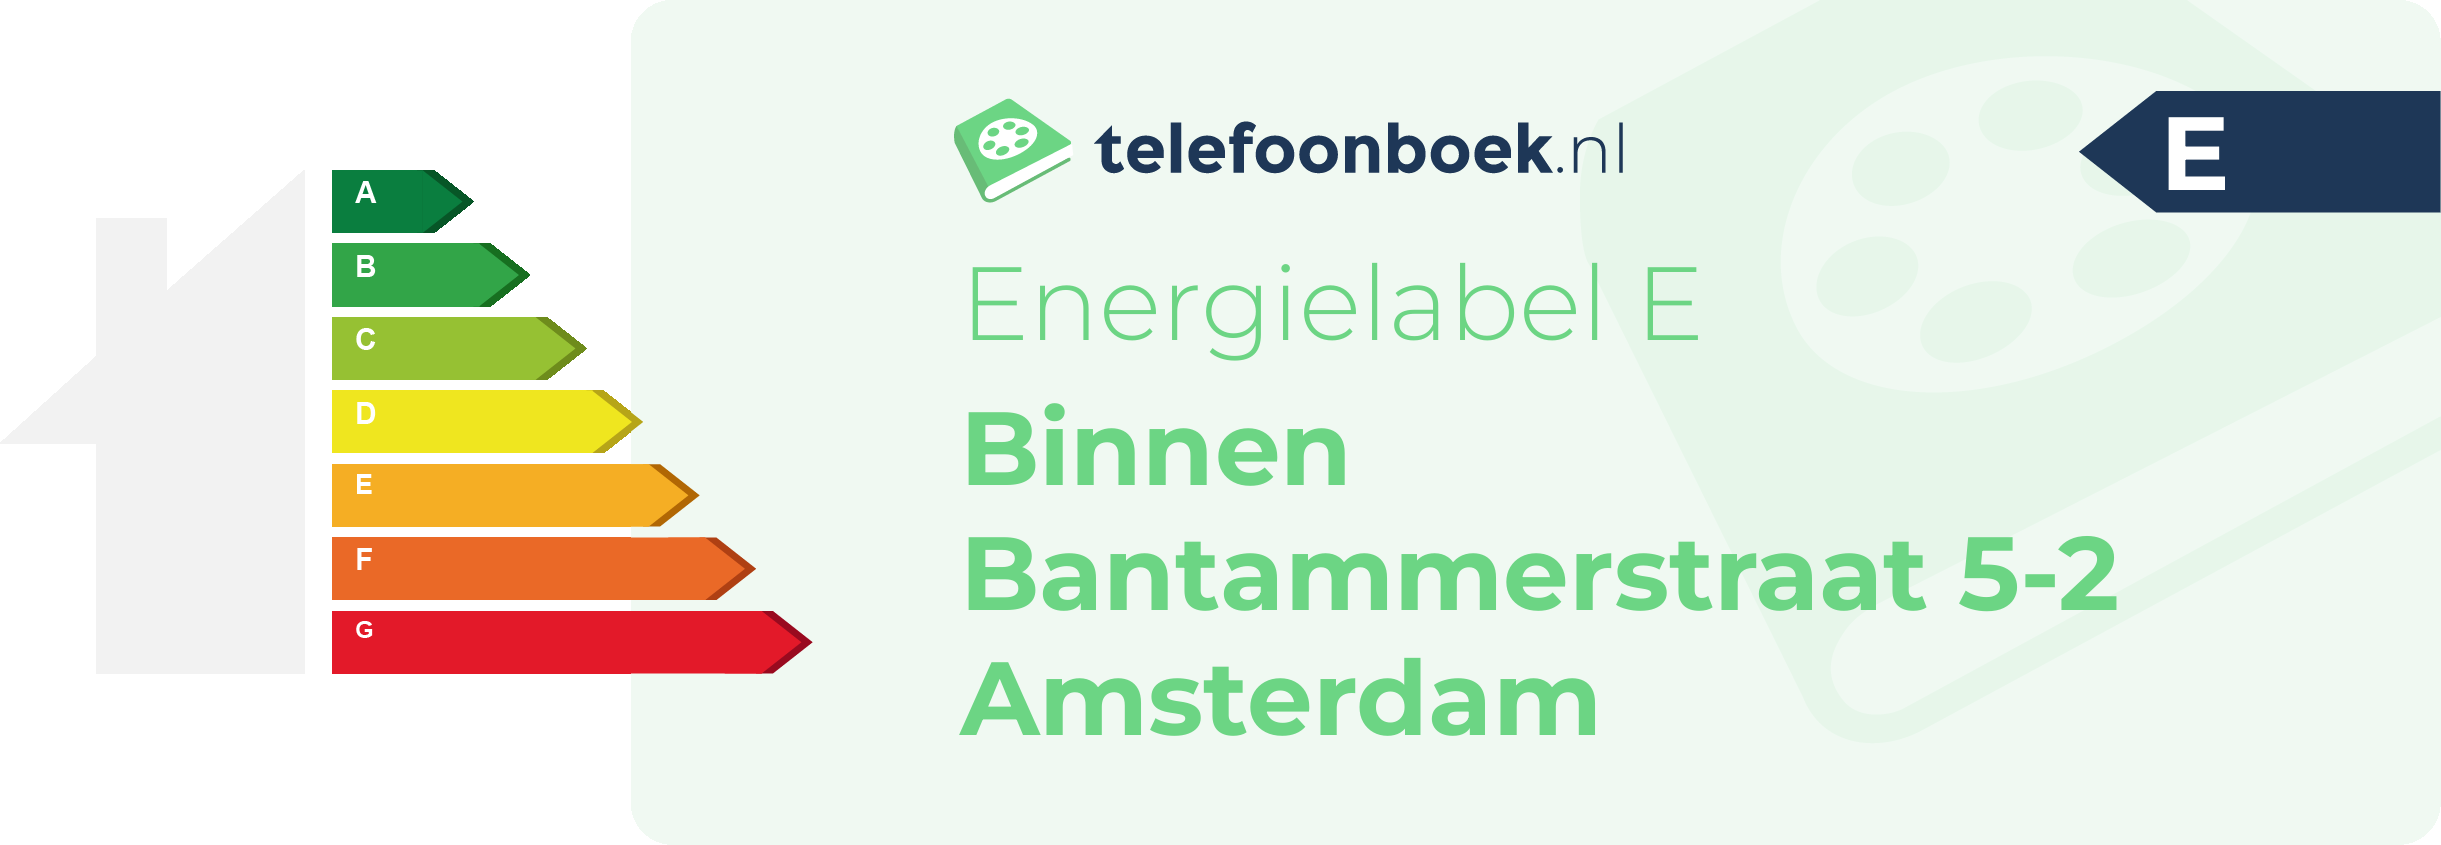 Energielabel Binnen Bantammerstraat 5-2 Amsterdam